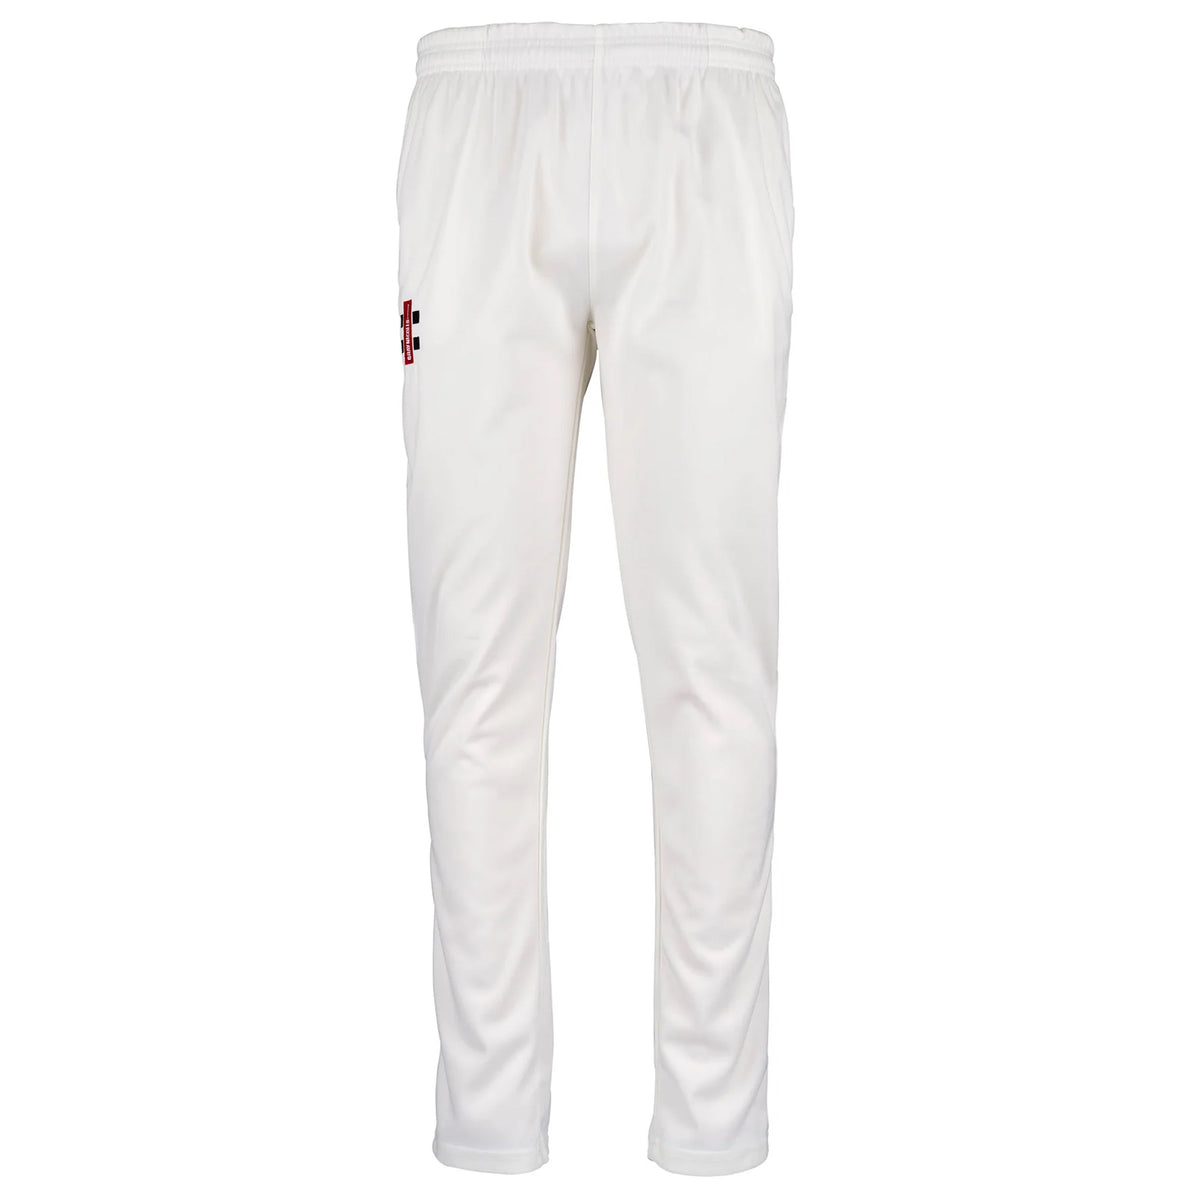 Gray Nicolls Matrix V2 Slim Fit Cricket Trousers: Ivory